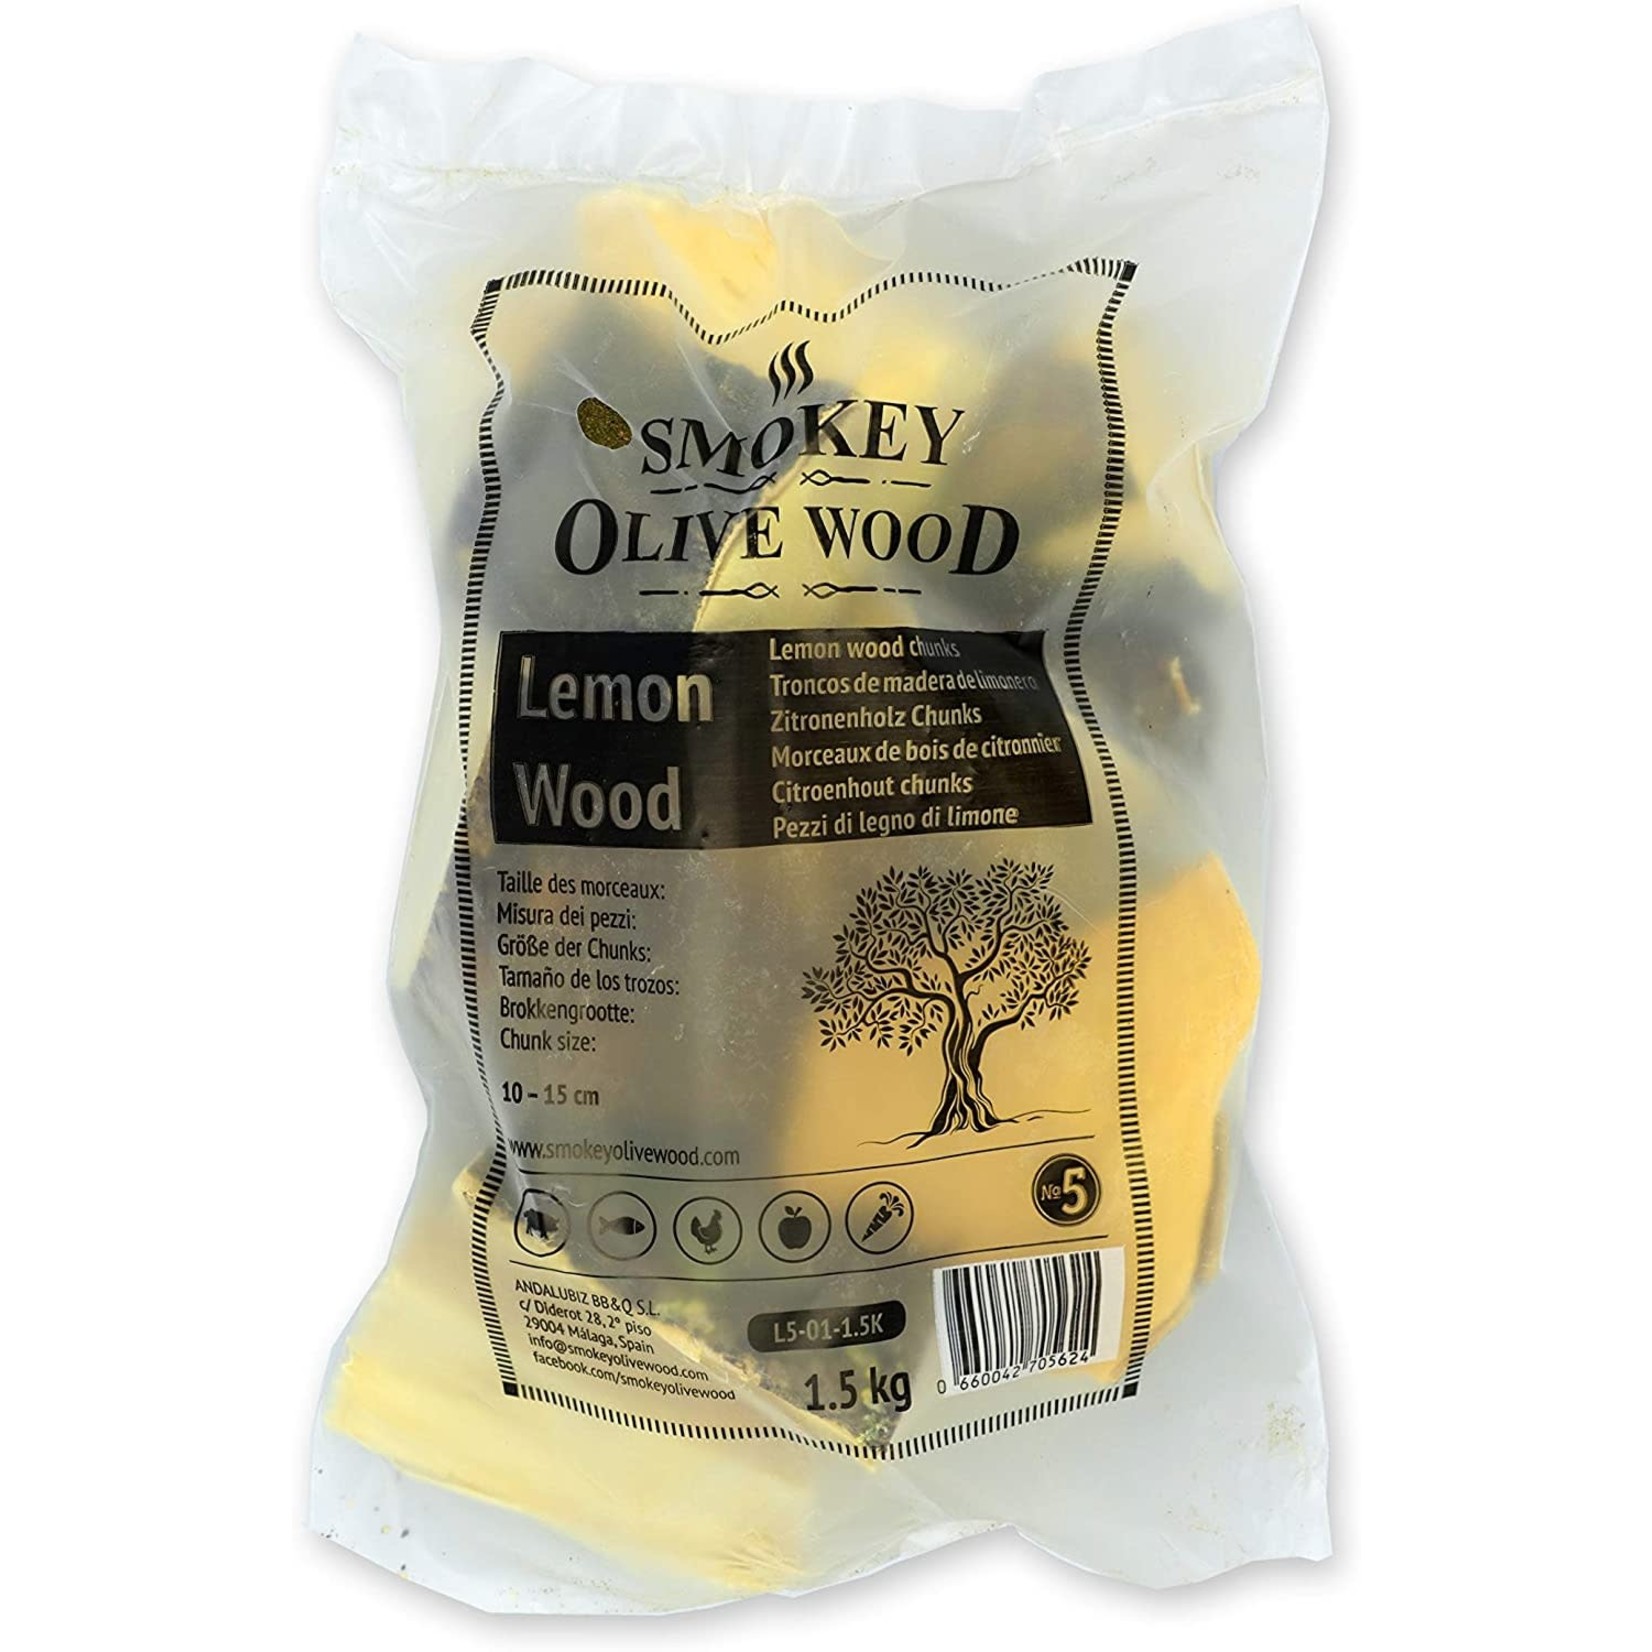 Smokey Olive Wood Lemon Chunks #5 1.5kg